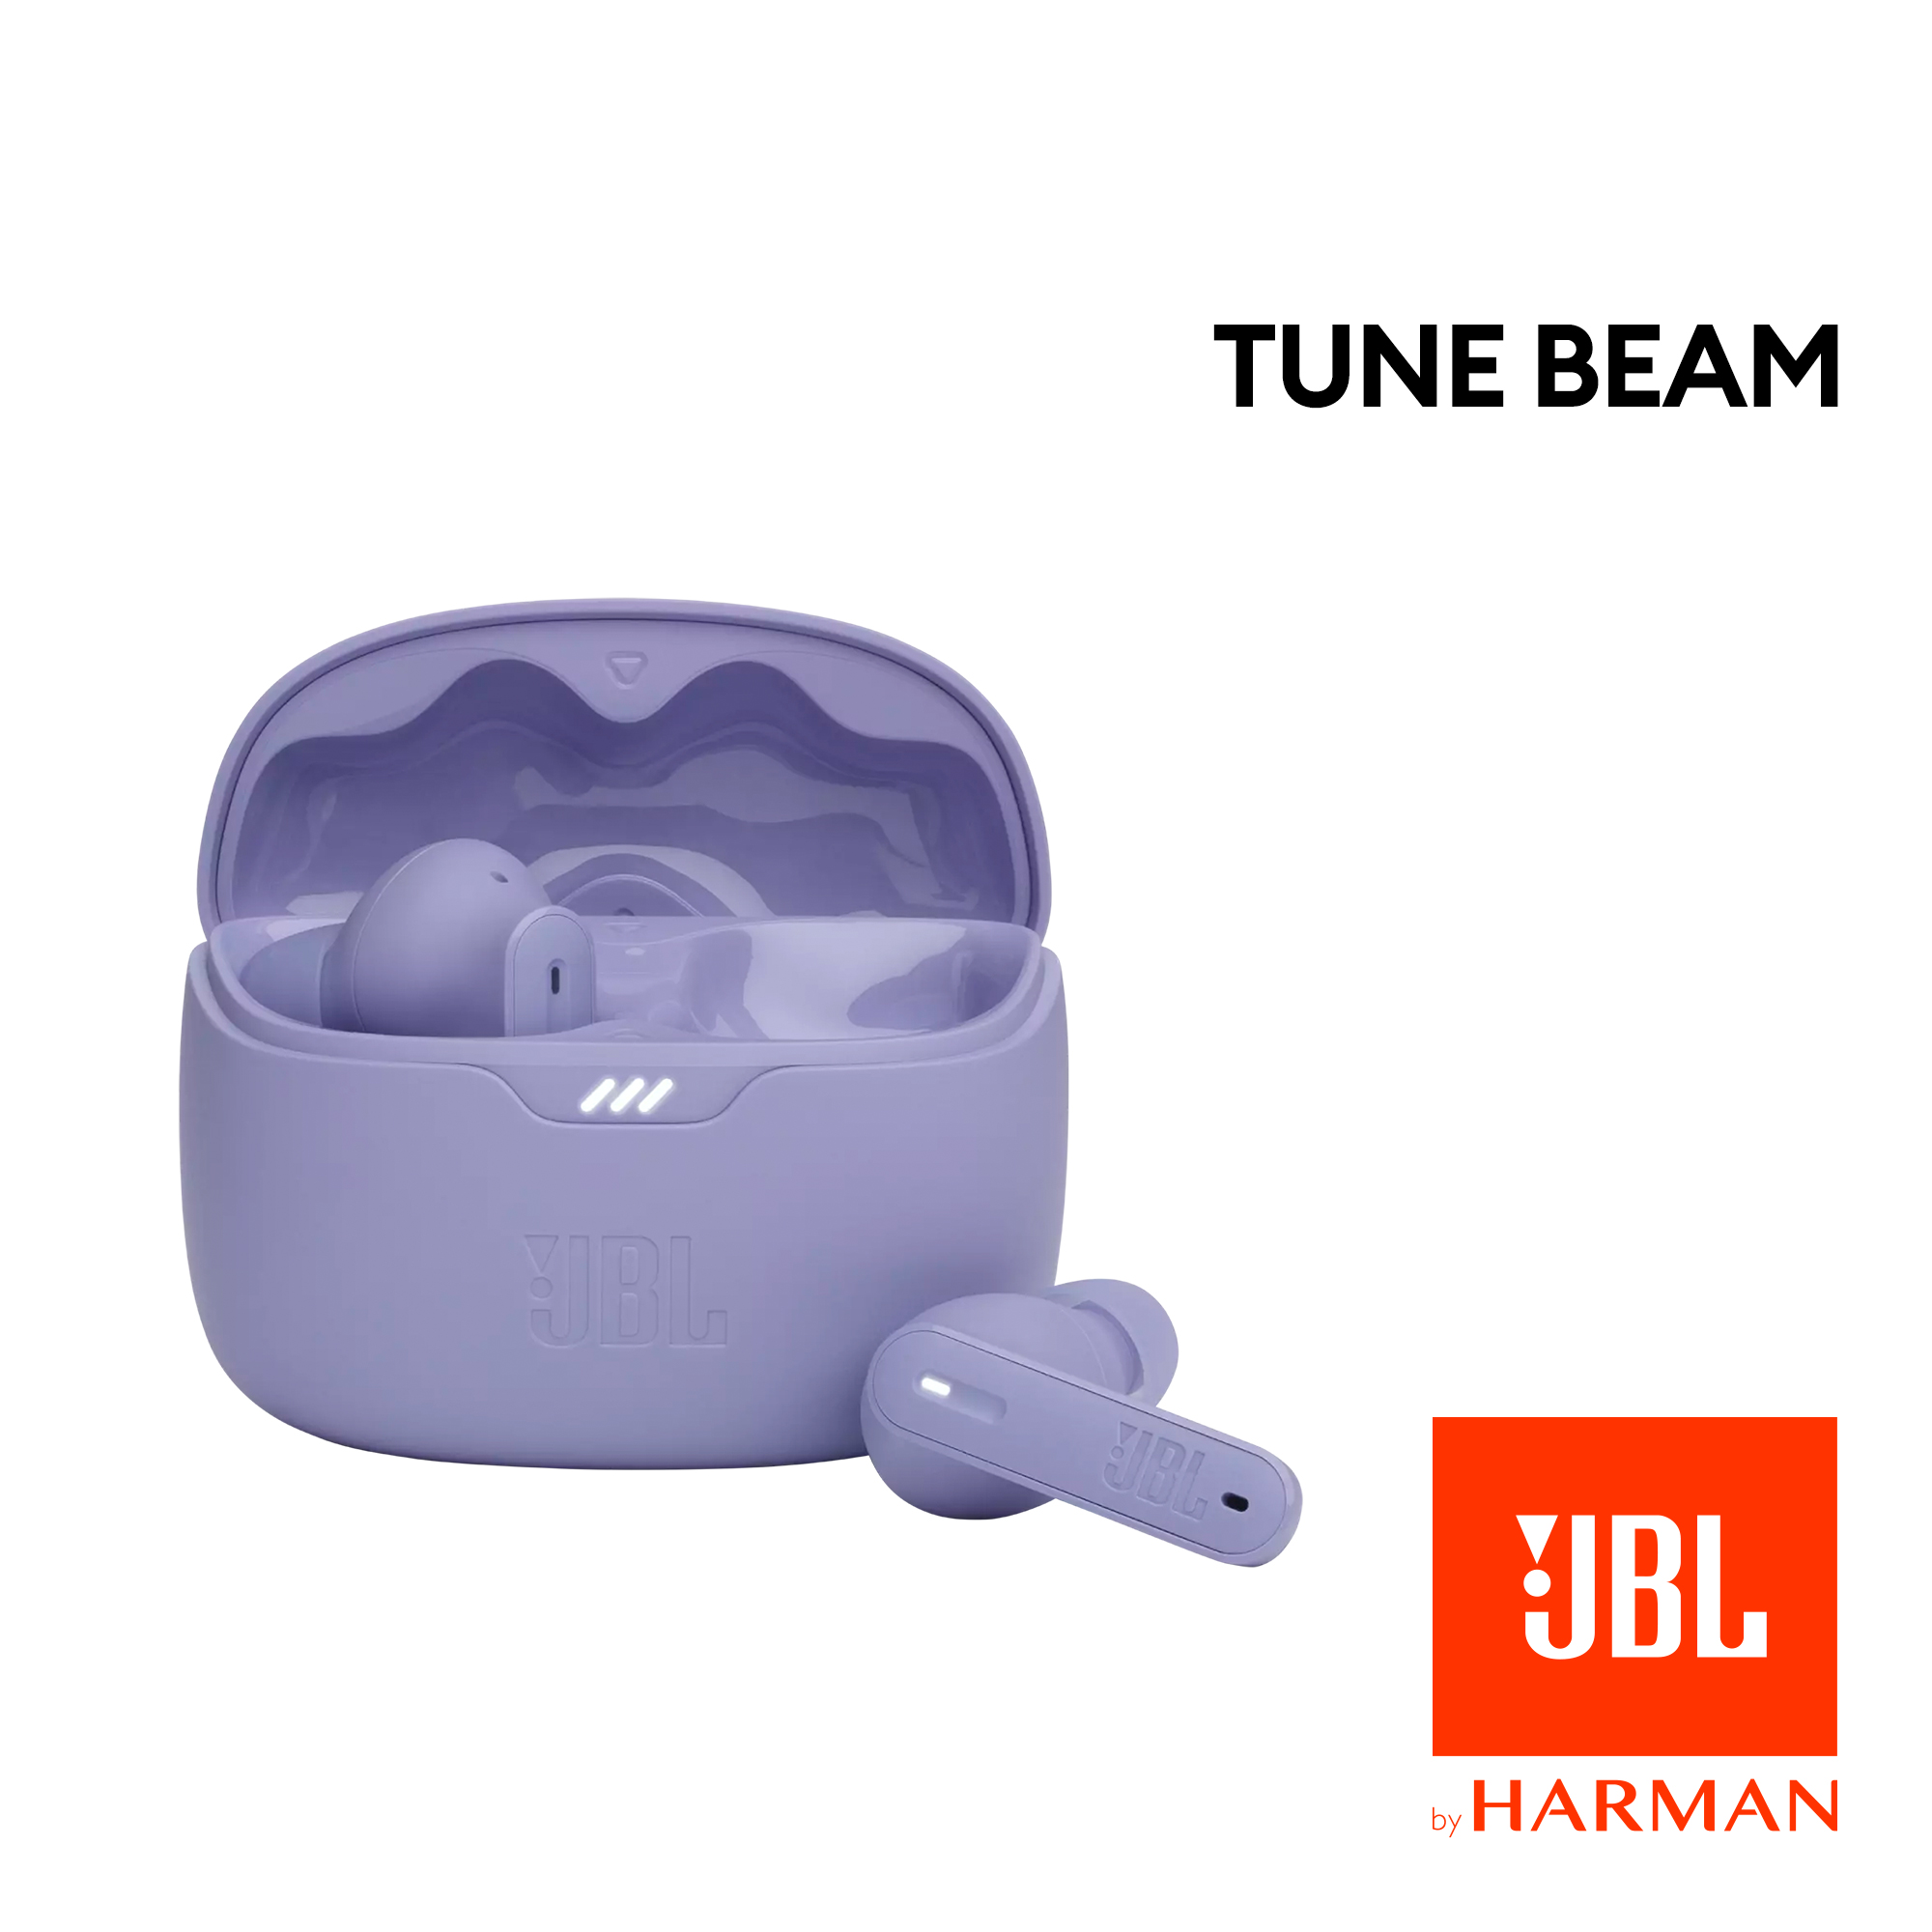 JBL Tune Beam wireless earbuds